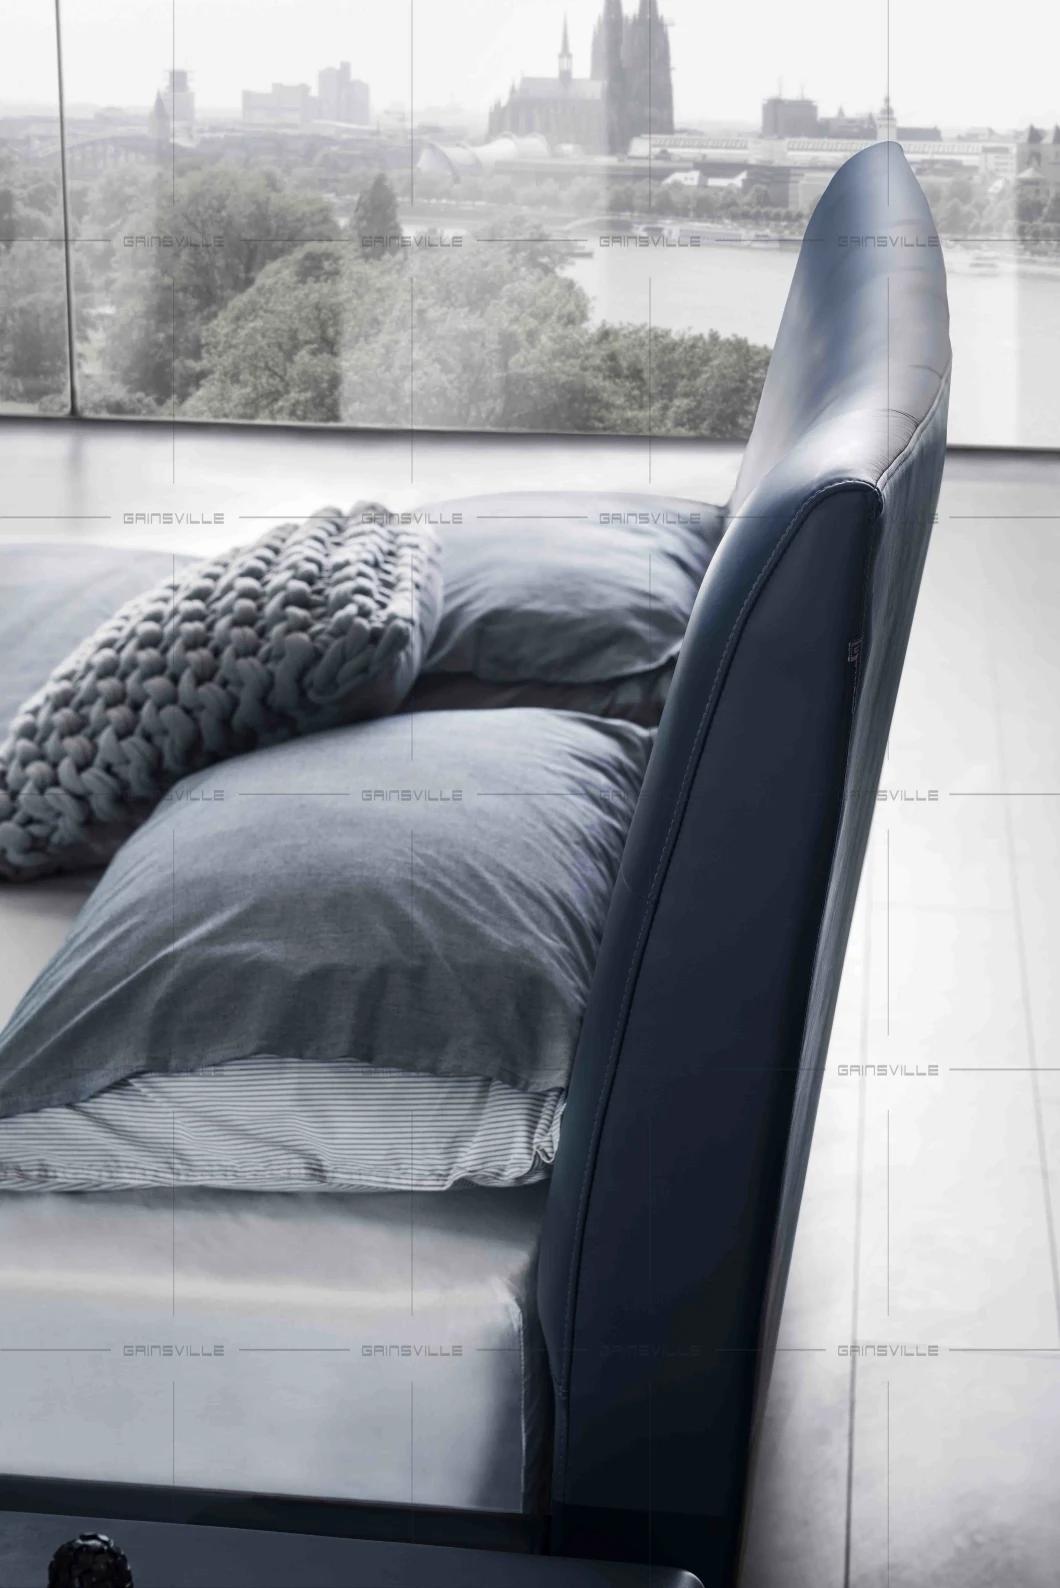 Foshan Factory Gainsville Modern Furniture Dark Blue Color Leather King Bed in Bedroom Furniture